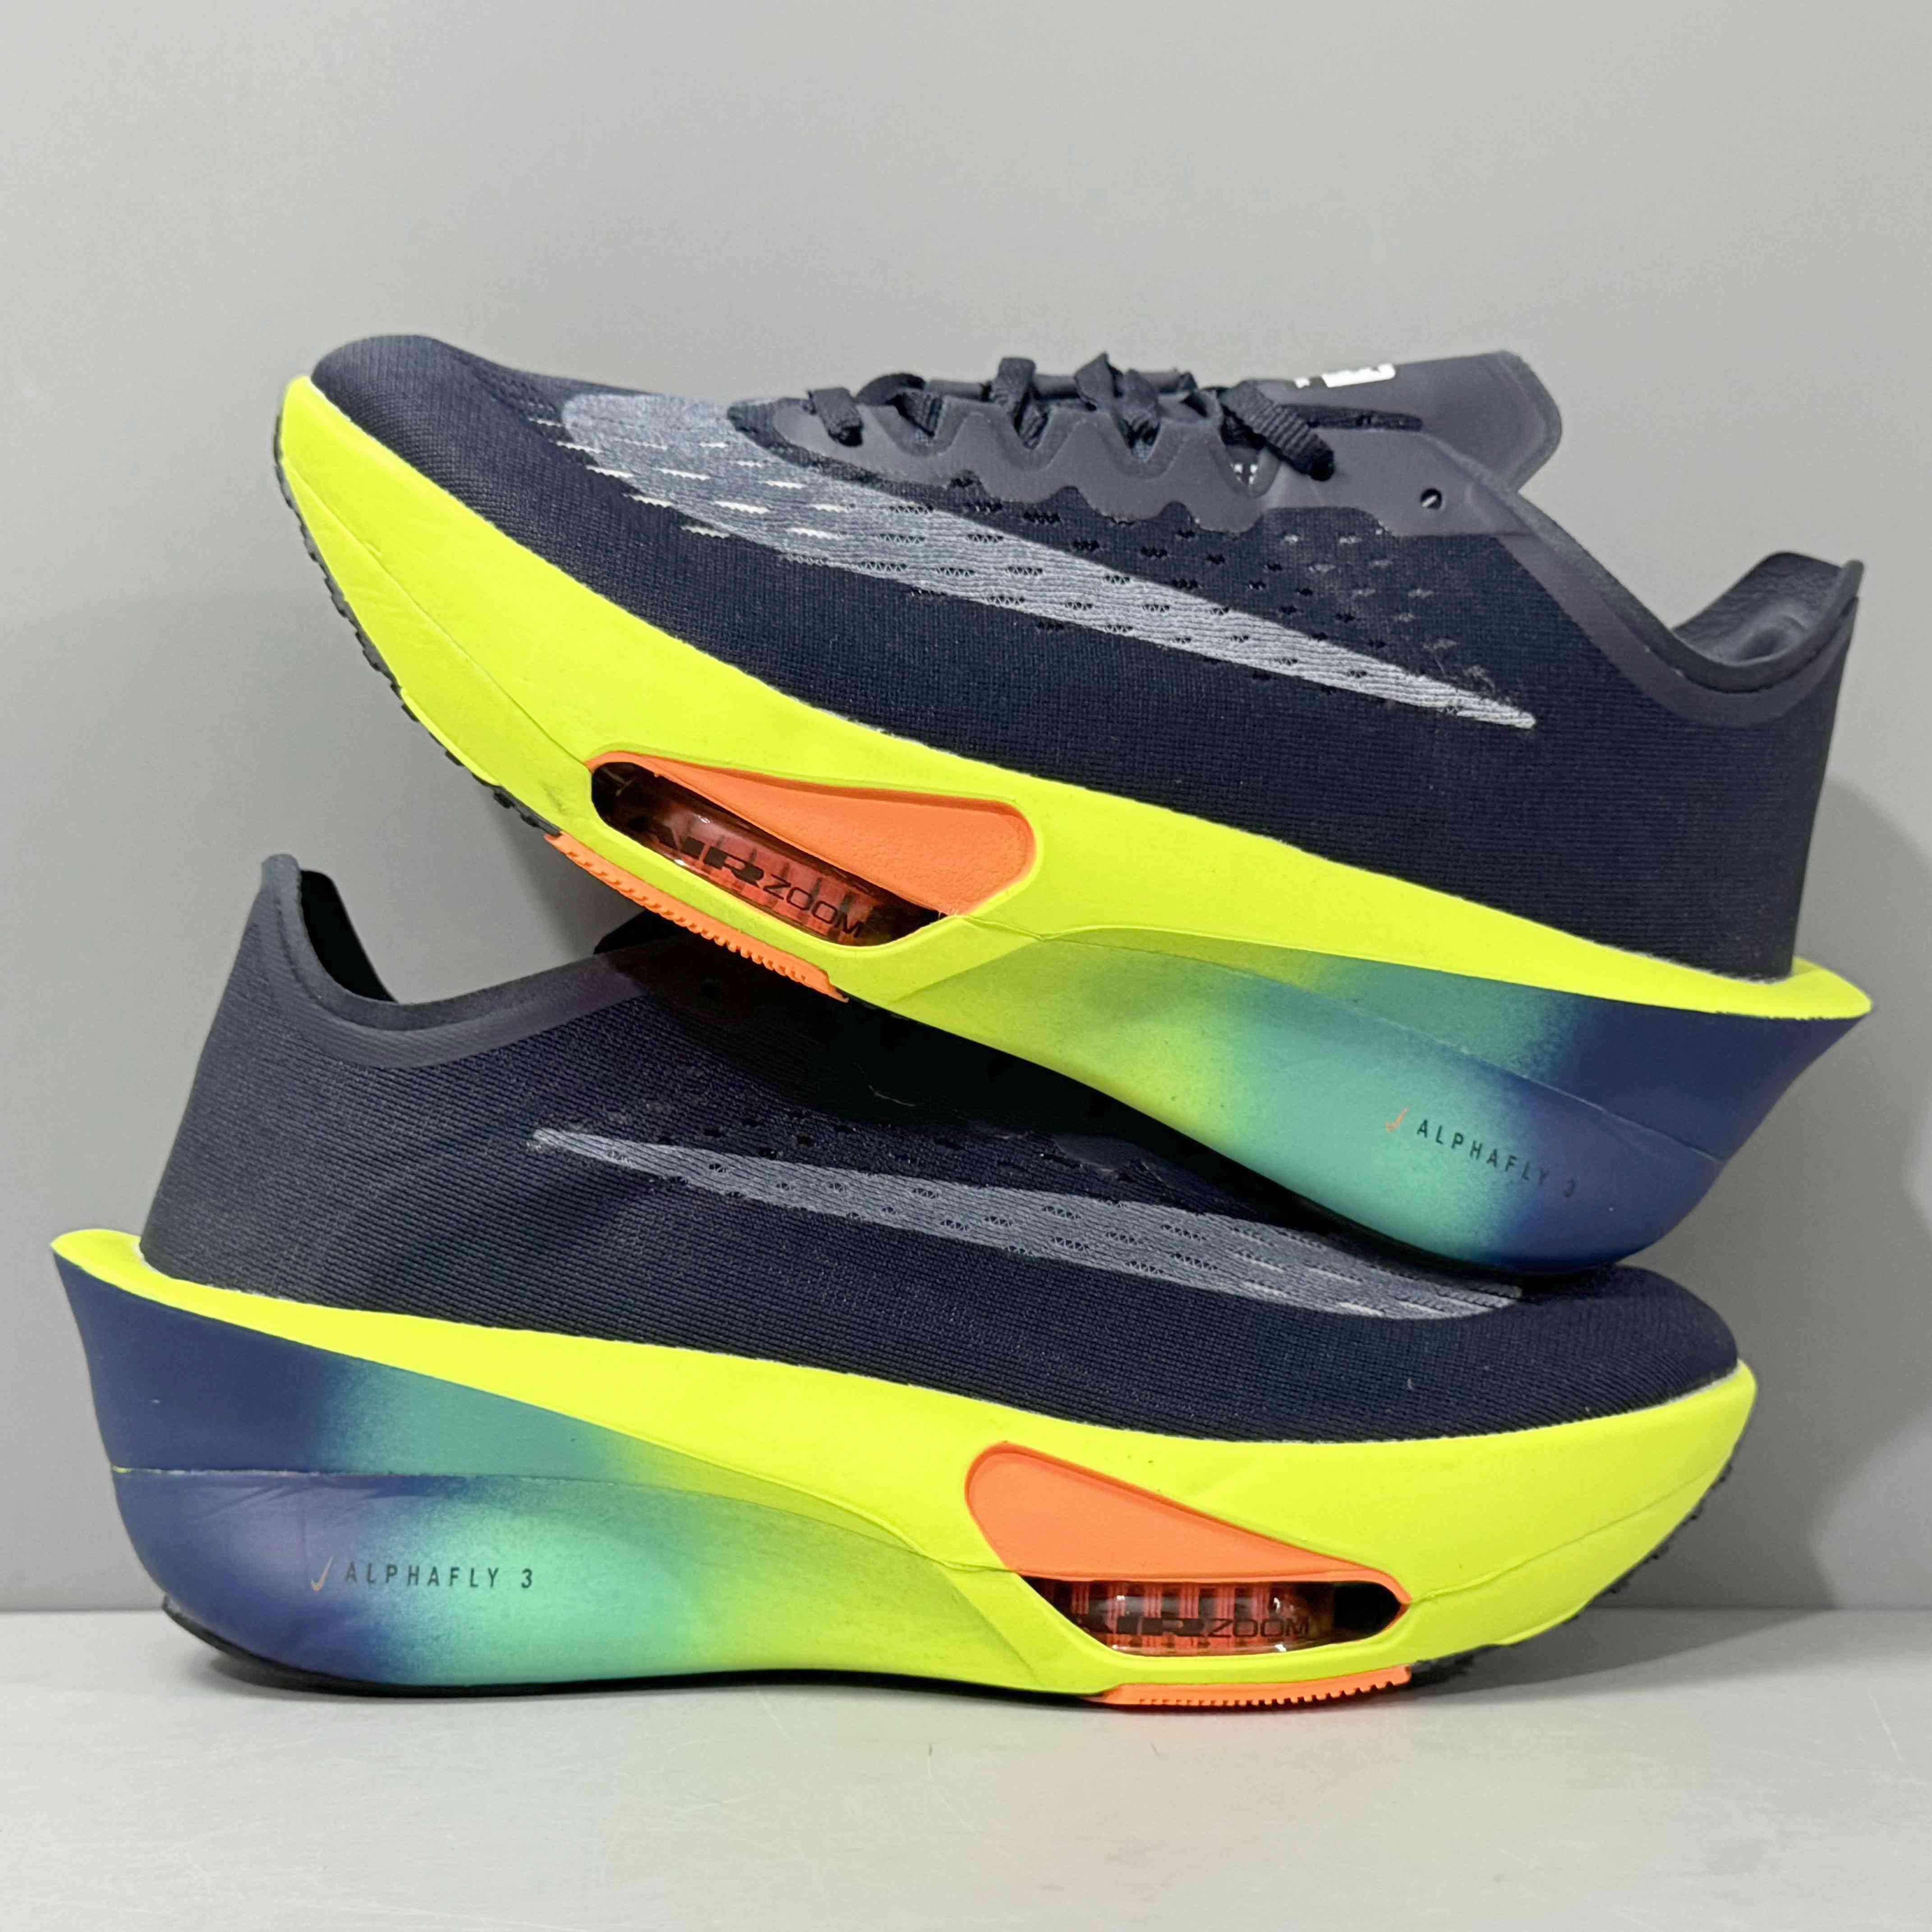 Nike Alphafly 3